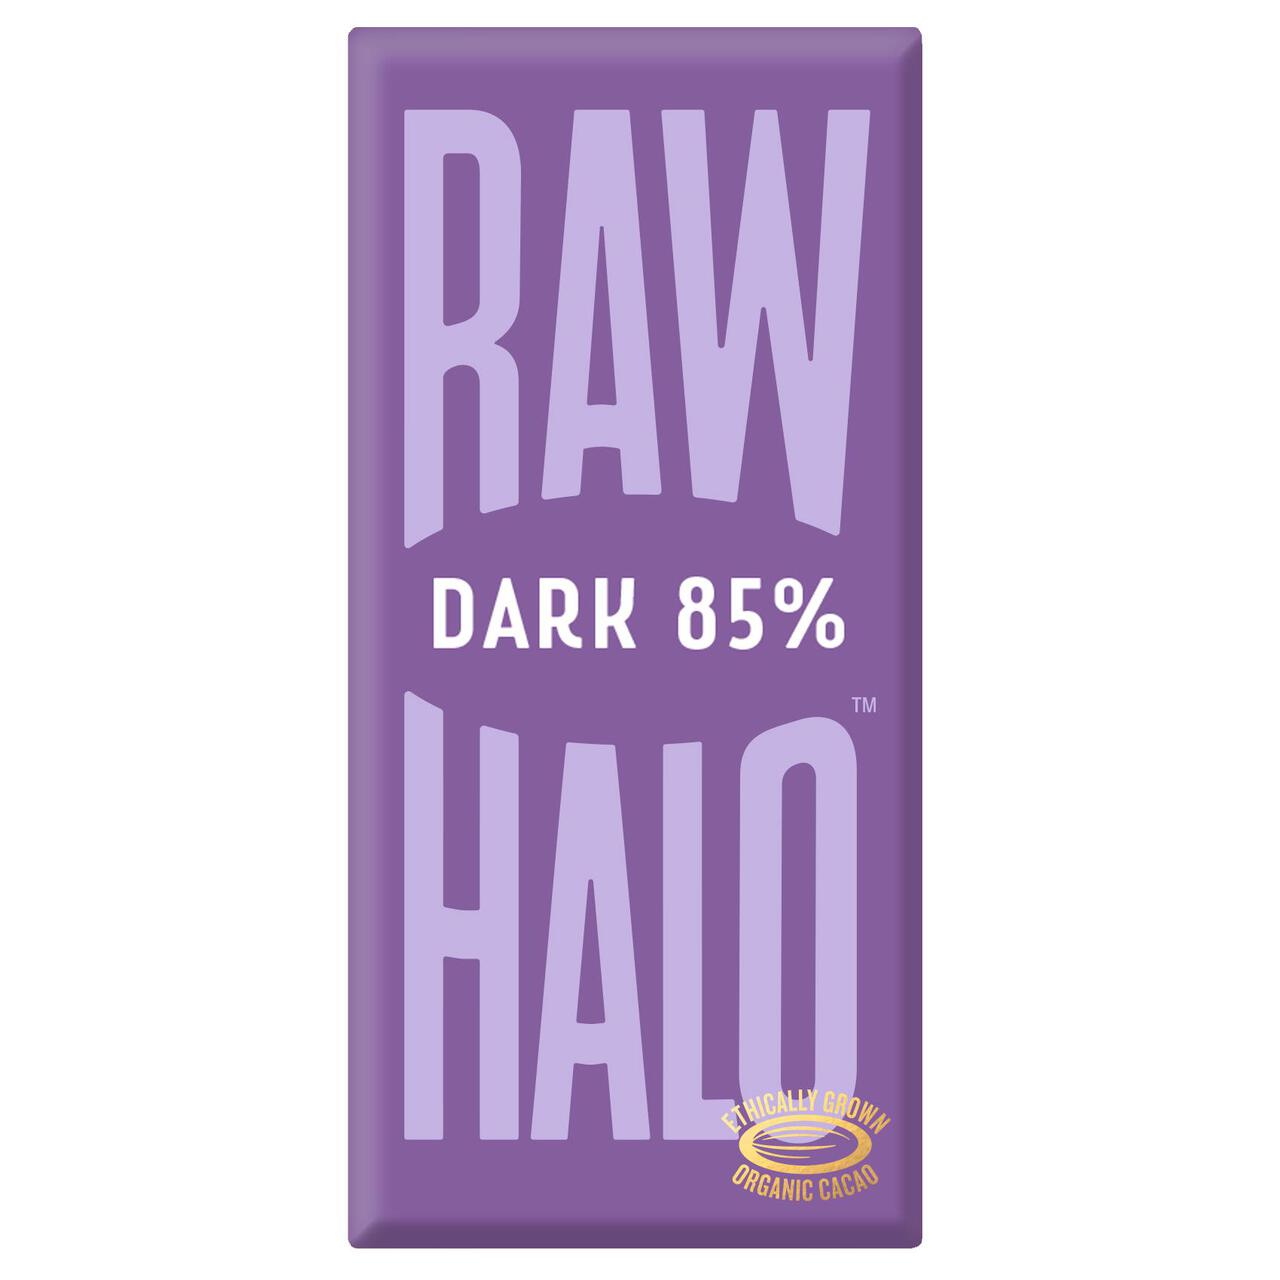 Raw Halo Vegan Dark 85% Chocolate Bar 70g